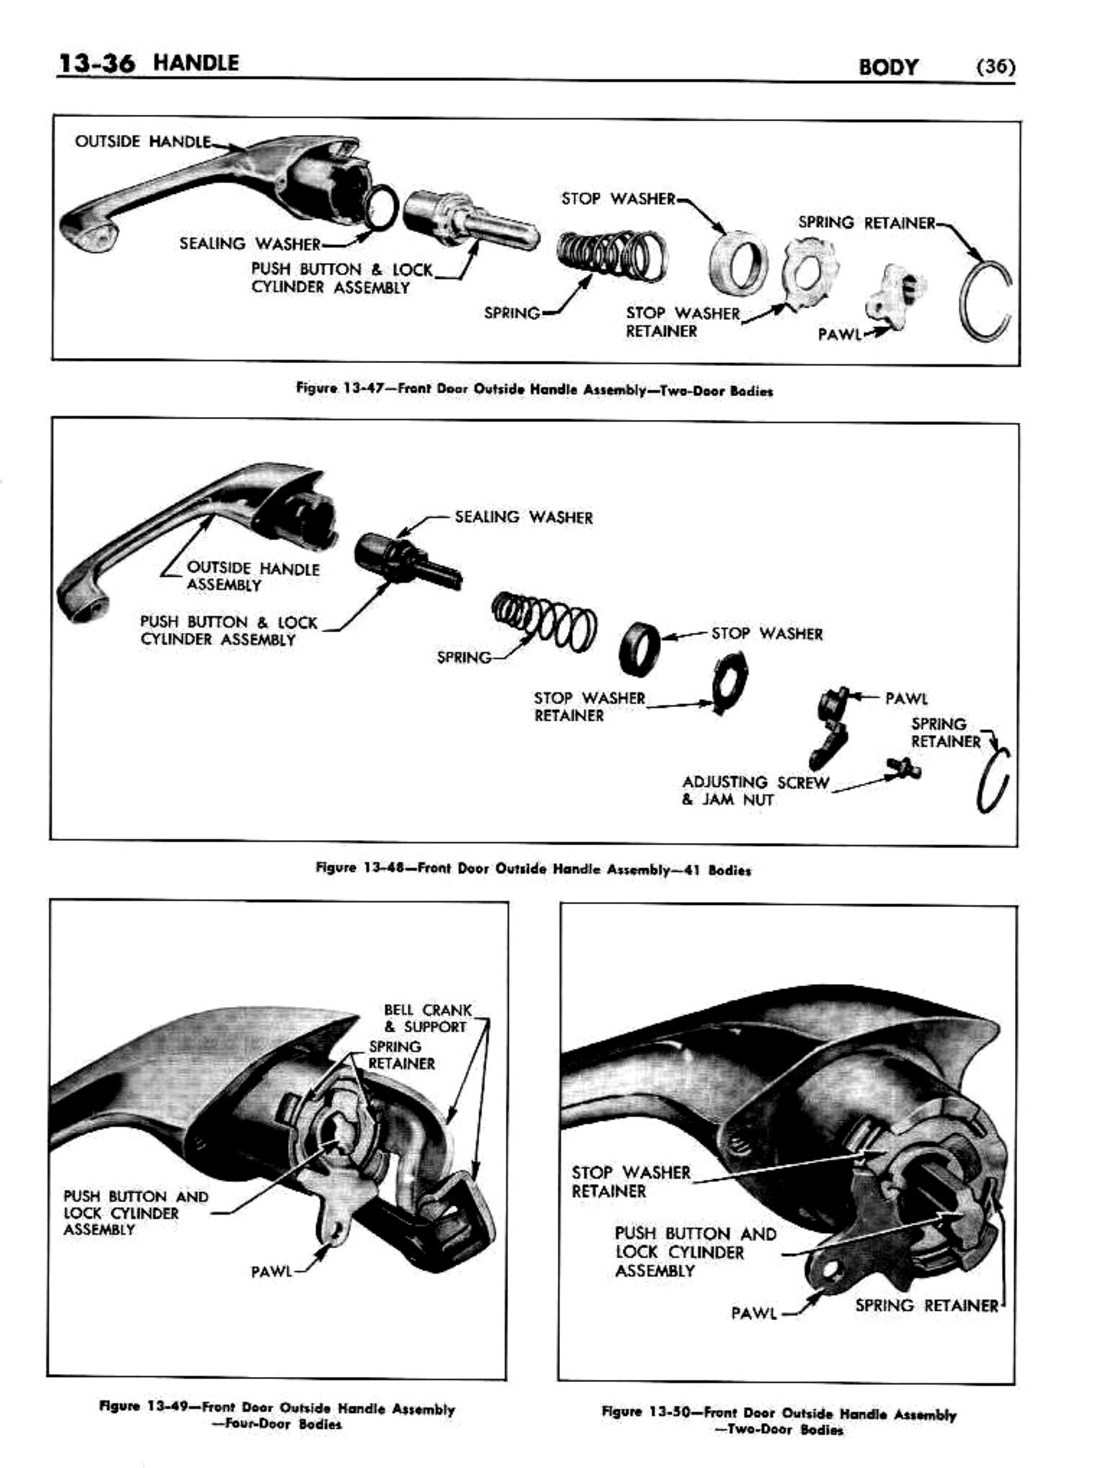 n_1958 Buick Body Service Manual-037-037.jpg